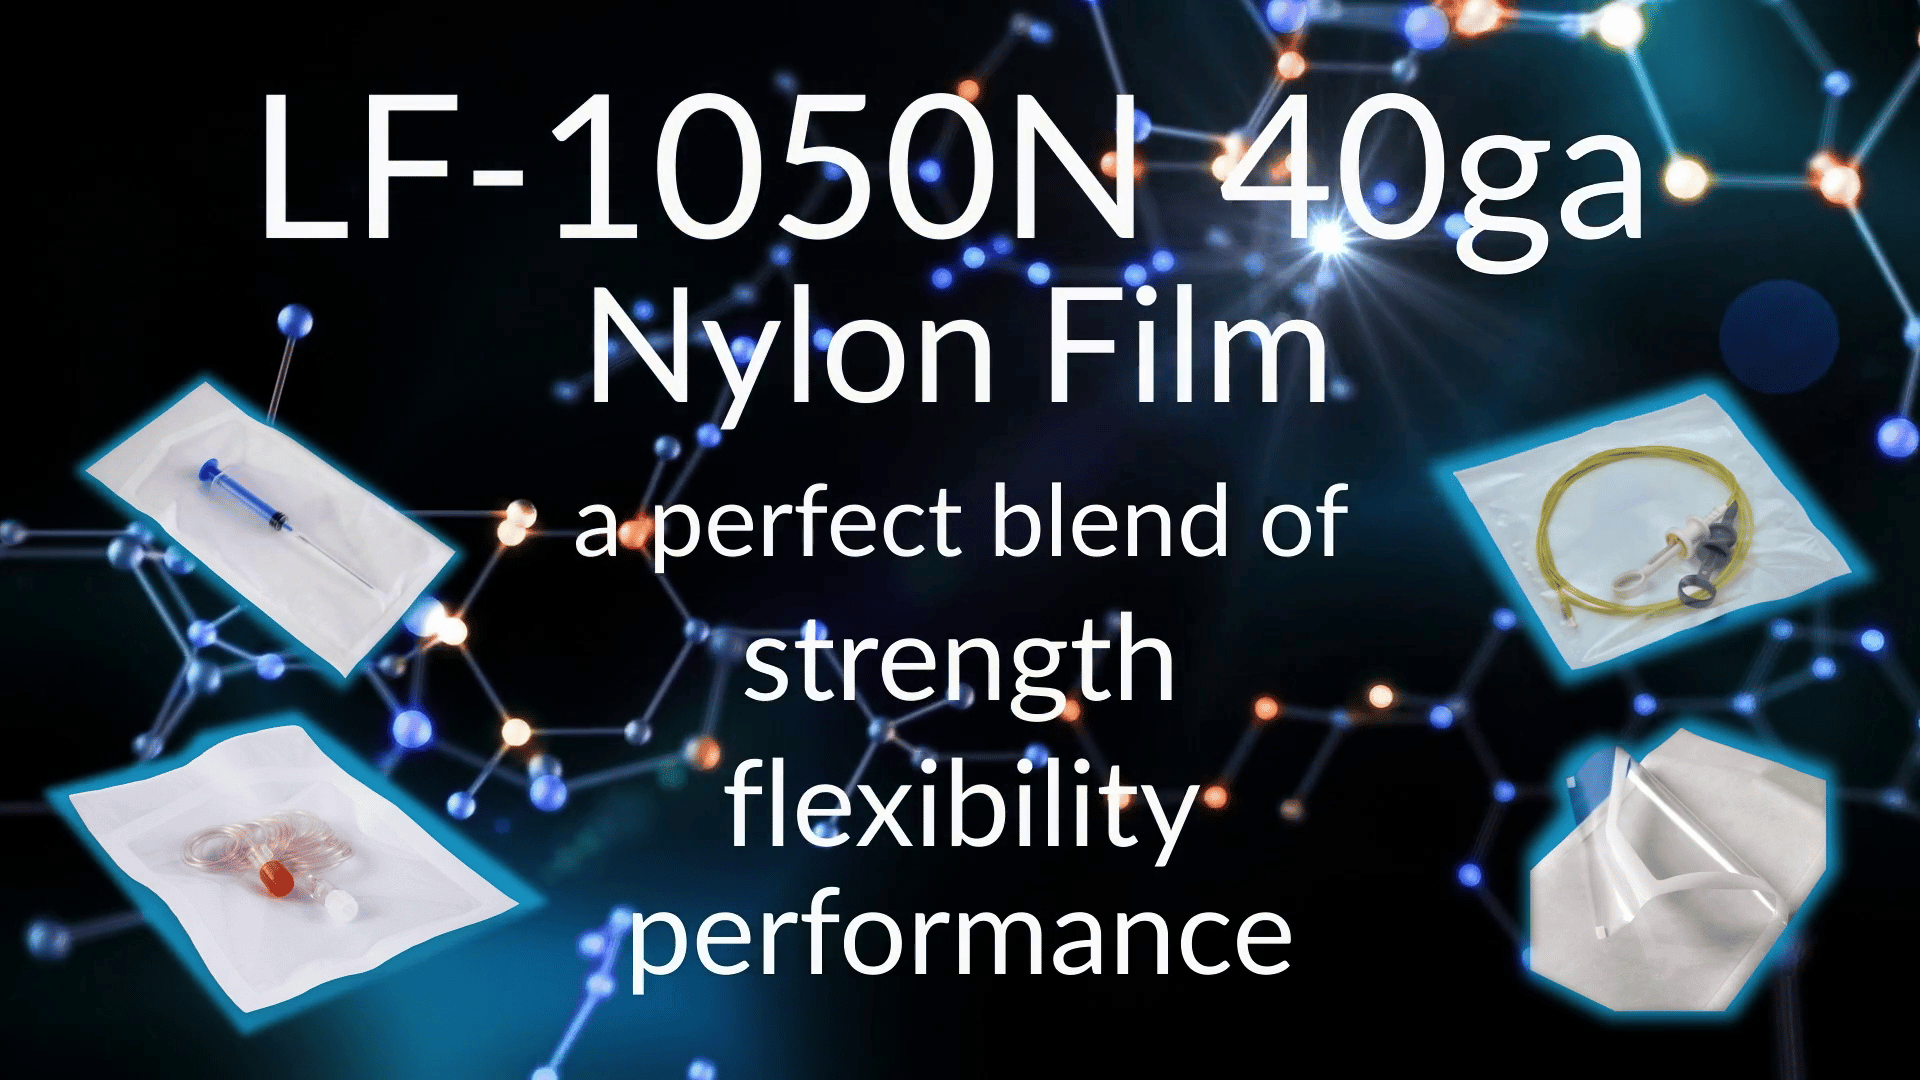 Introducing LF-1050N, Oliver's 40ga Nylon Film